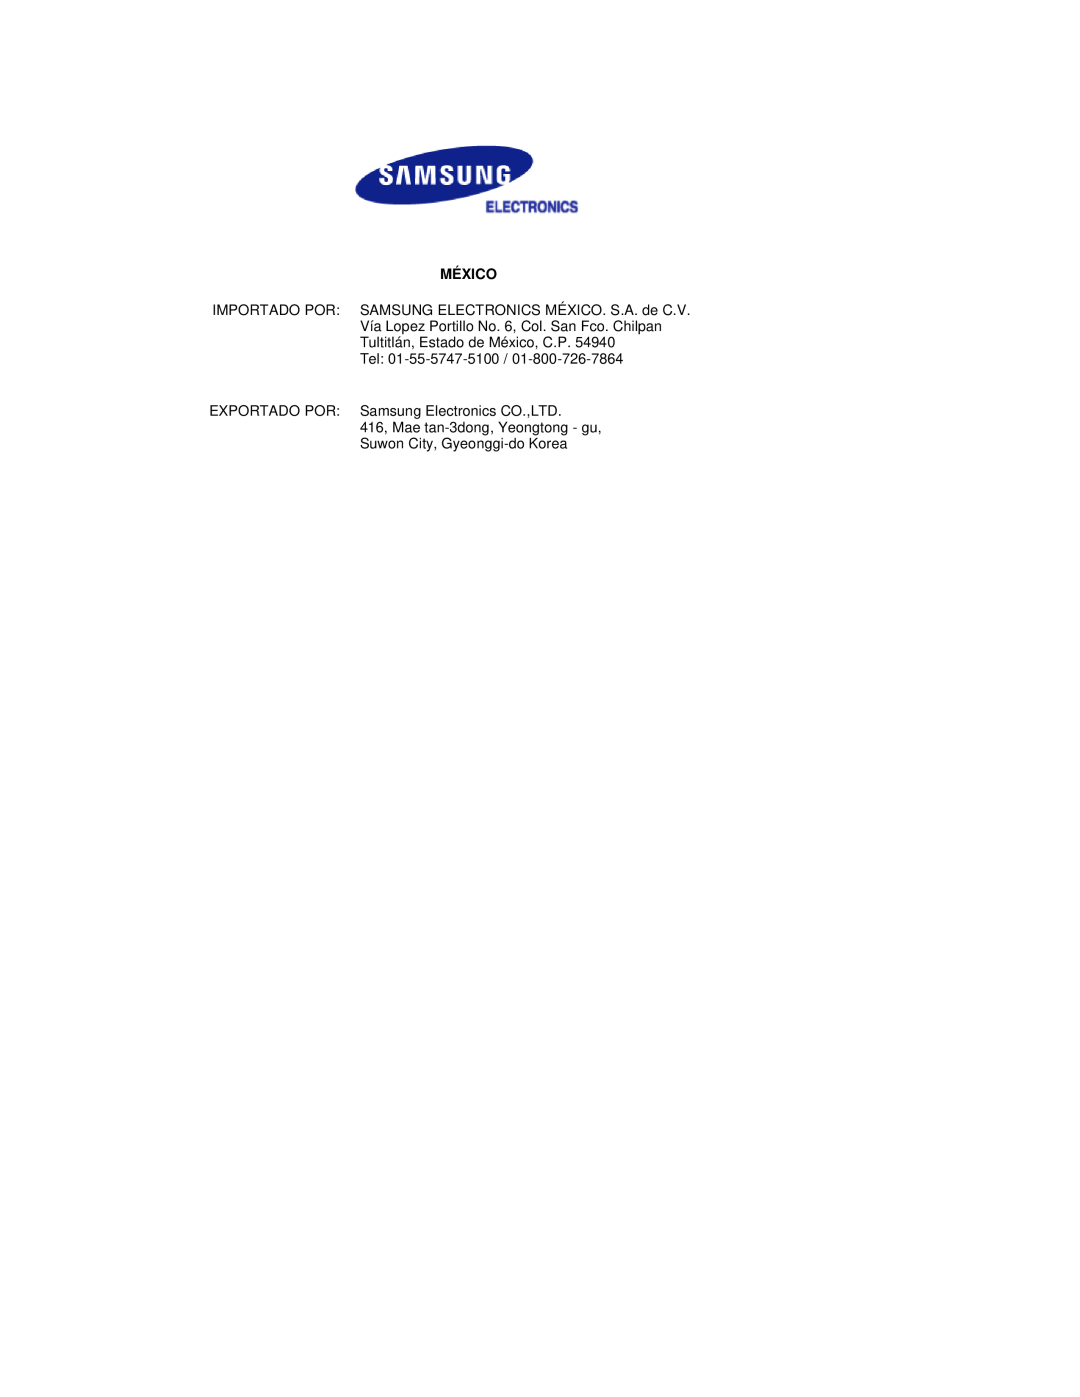 Samsung 400Pn, 400P manual México, Tel 01-55-5747-5100, 416, Mae tan-3dong, Yeongtong - gu Suwon City, Gyeonggi-do Korea 